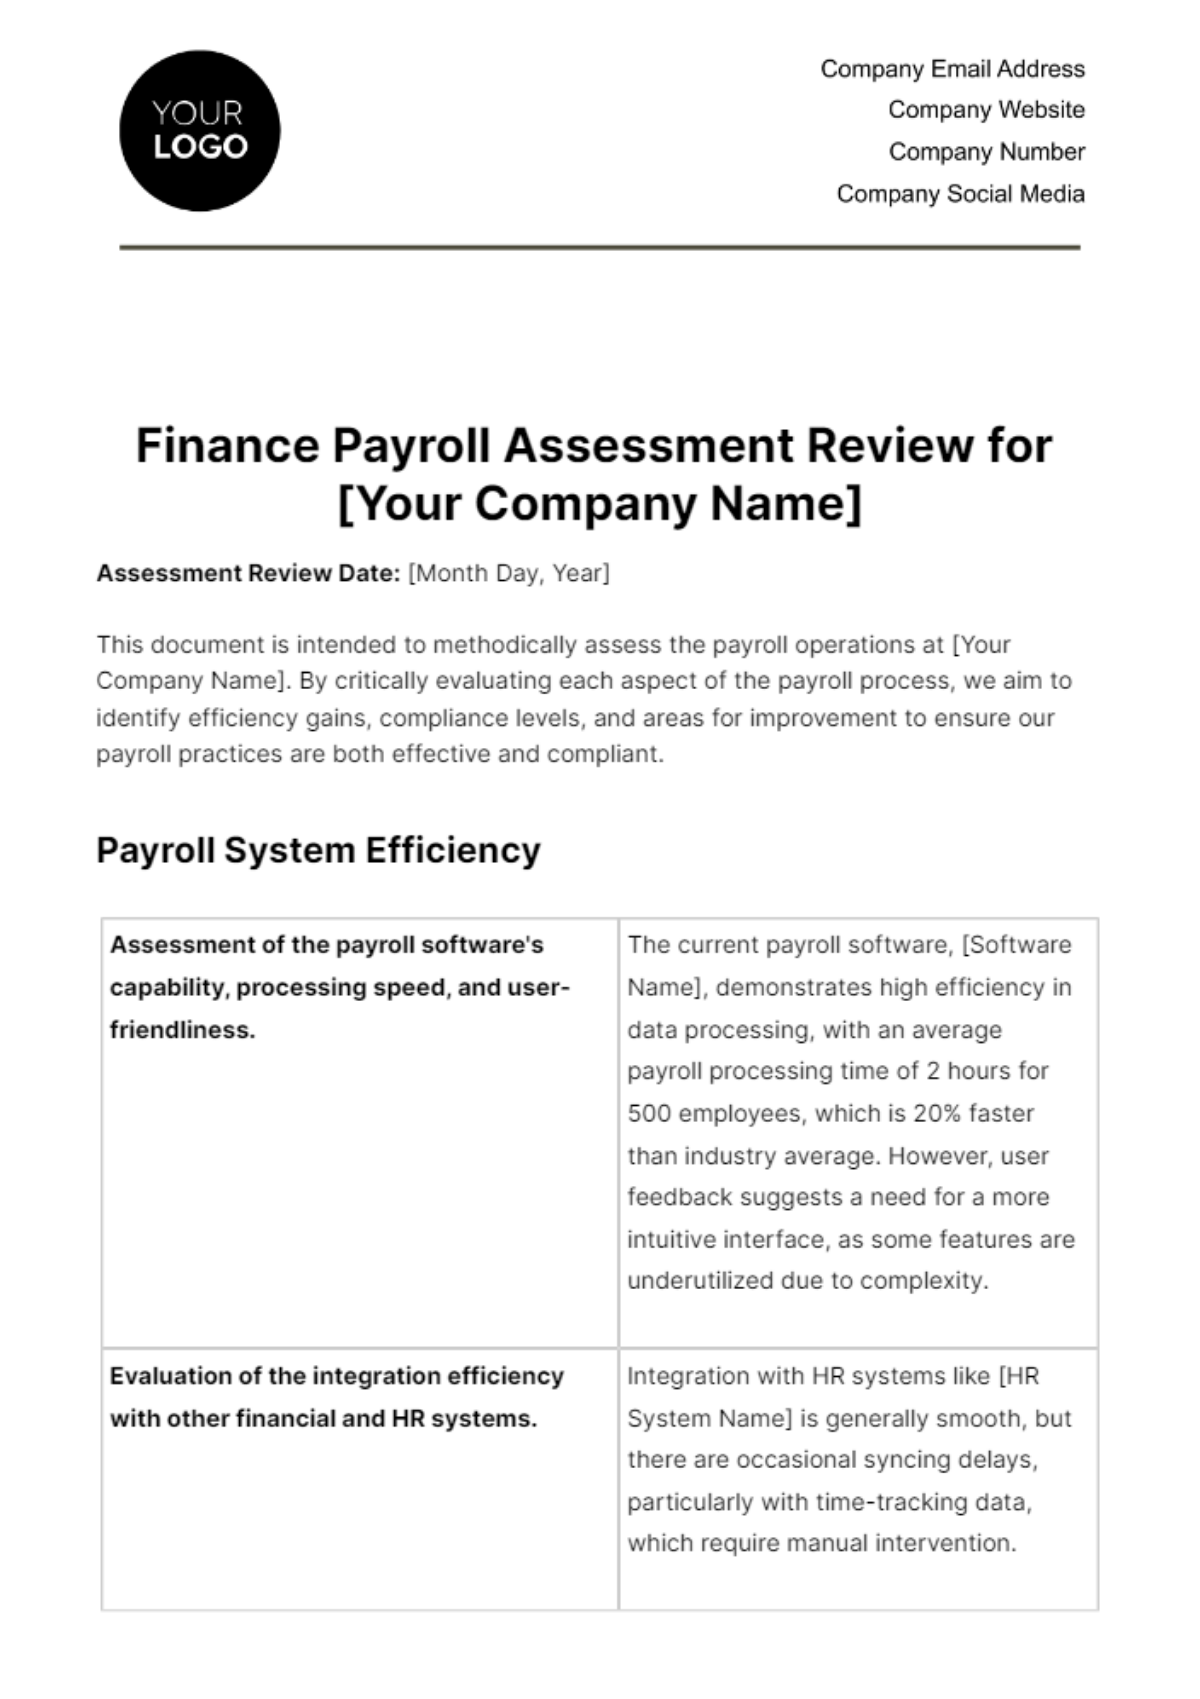 Finance Payroll Assessment Review Template